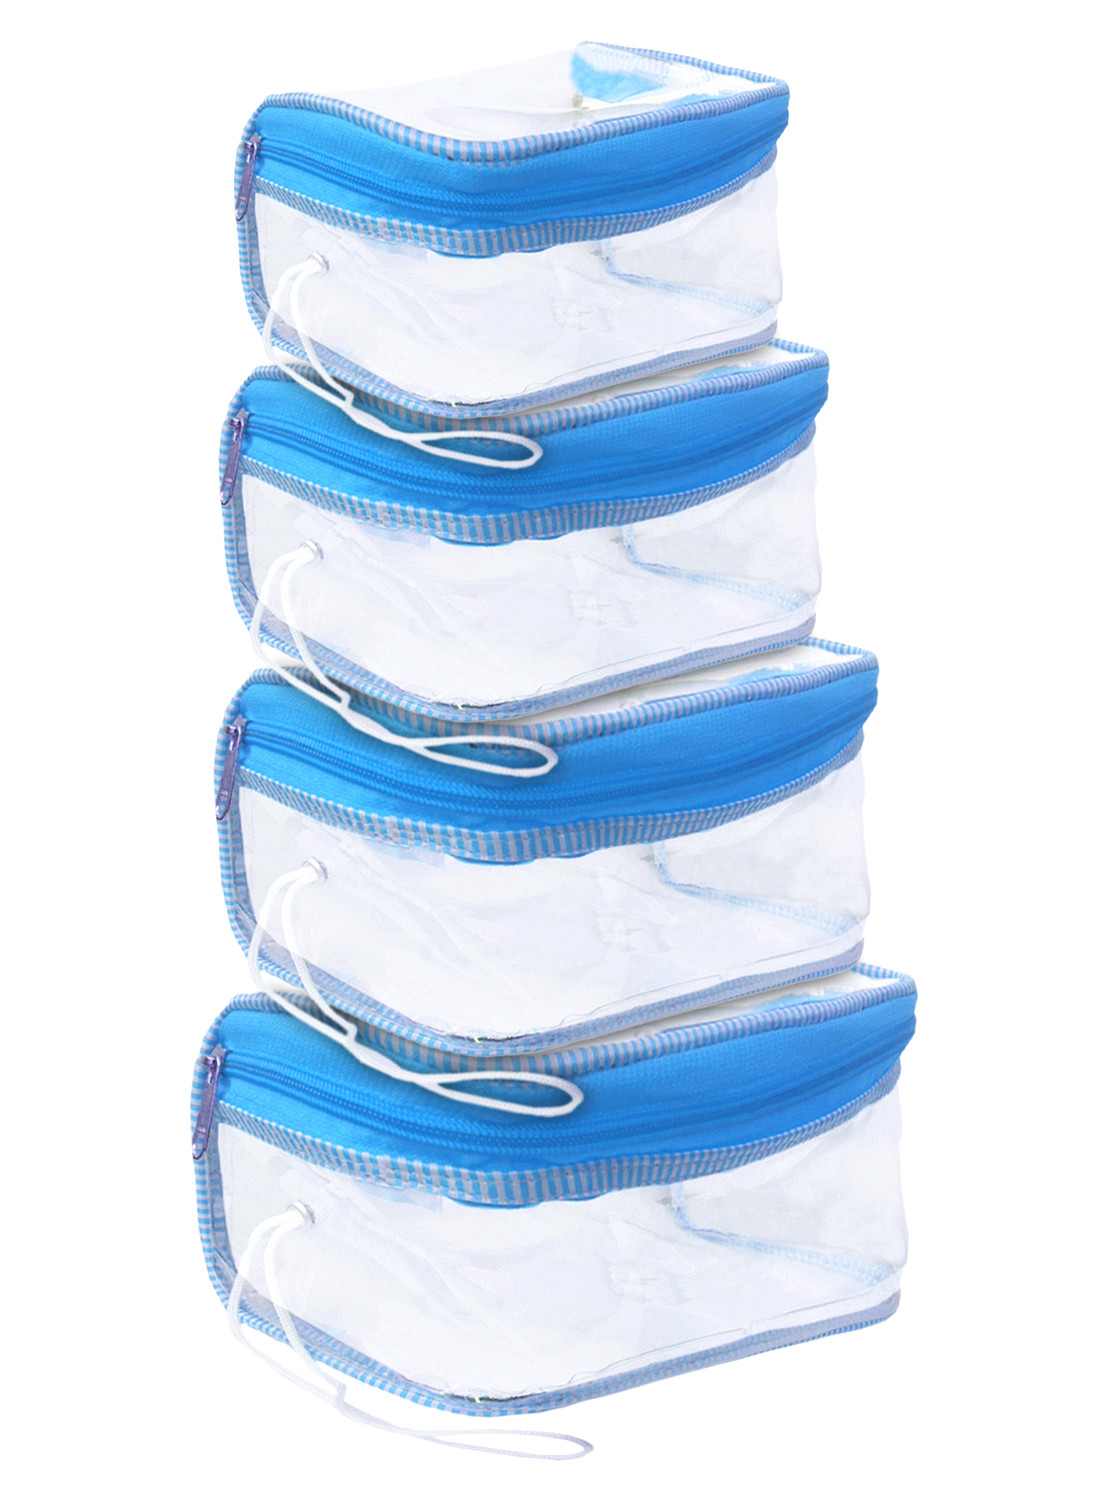 Kuber Industries Multiuses PVC Check Print Travel Toiletry Bag/Dopp Kit For Traveling Set of 4 (Transparent)